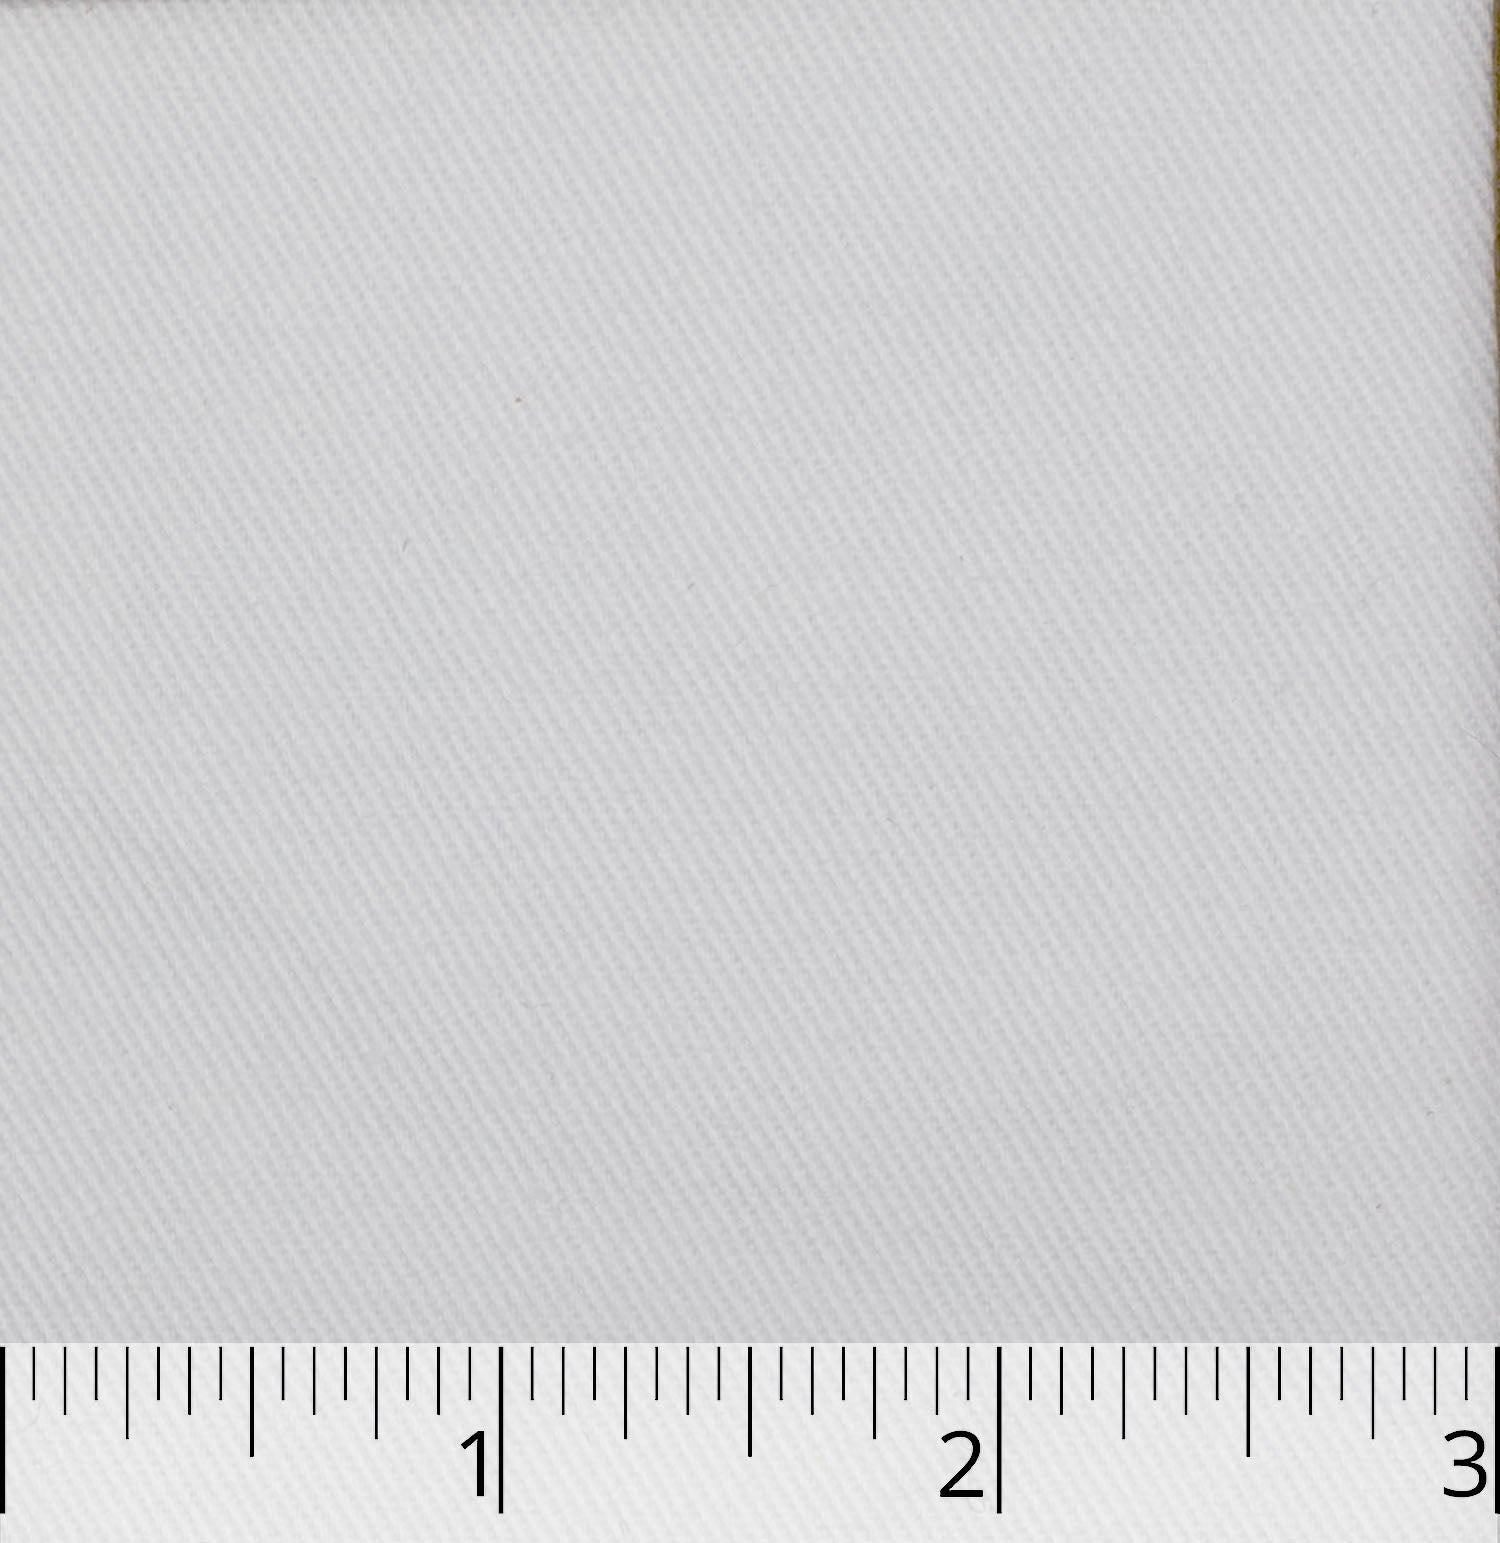 White Cotton Twill - $10.00 yd. - Burnley & Trowbridge Co.